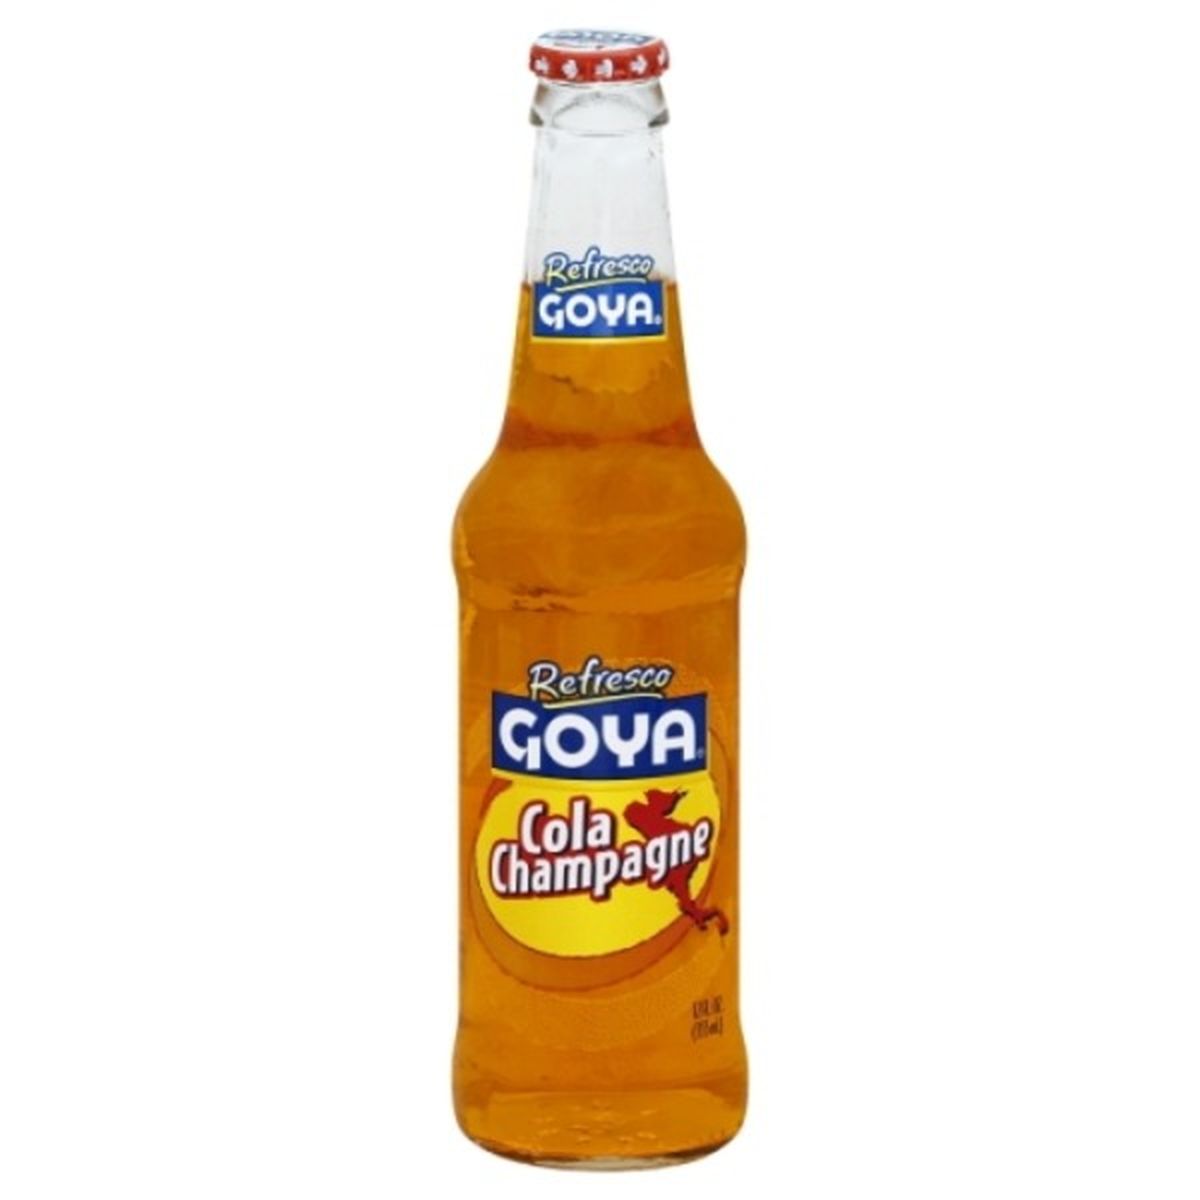 Calories in Goya Refresco Cola Champagne